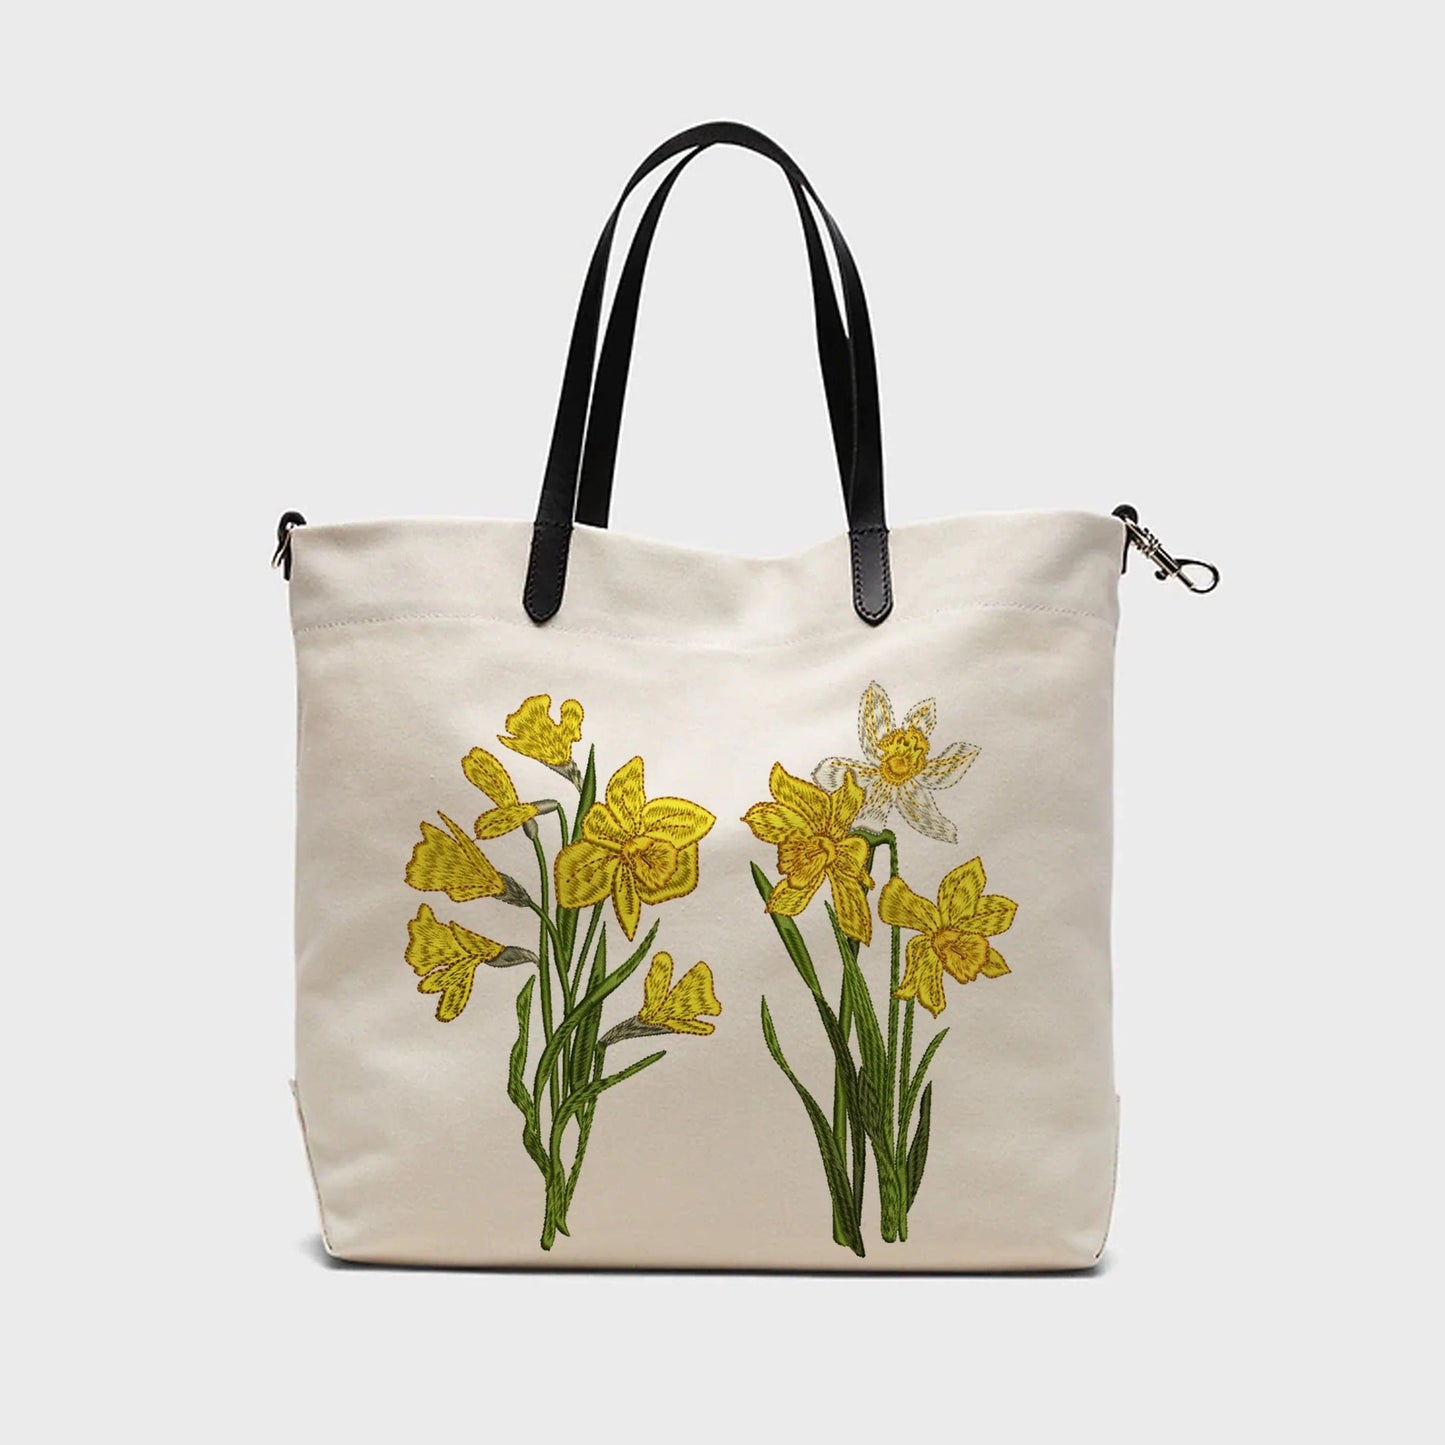 Daffodil Spring Narcissus Flowers machine embroidery design on handbag